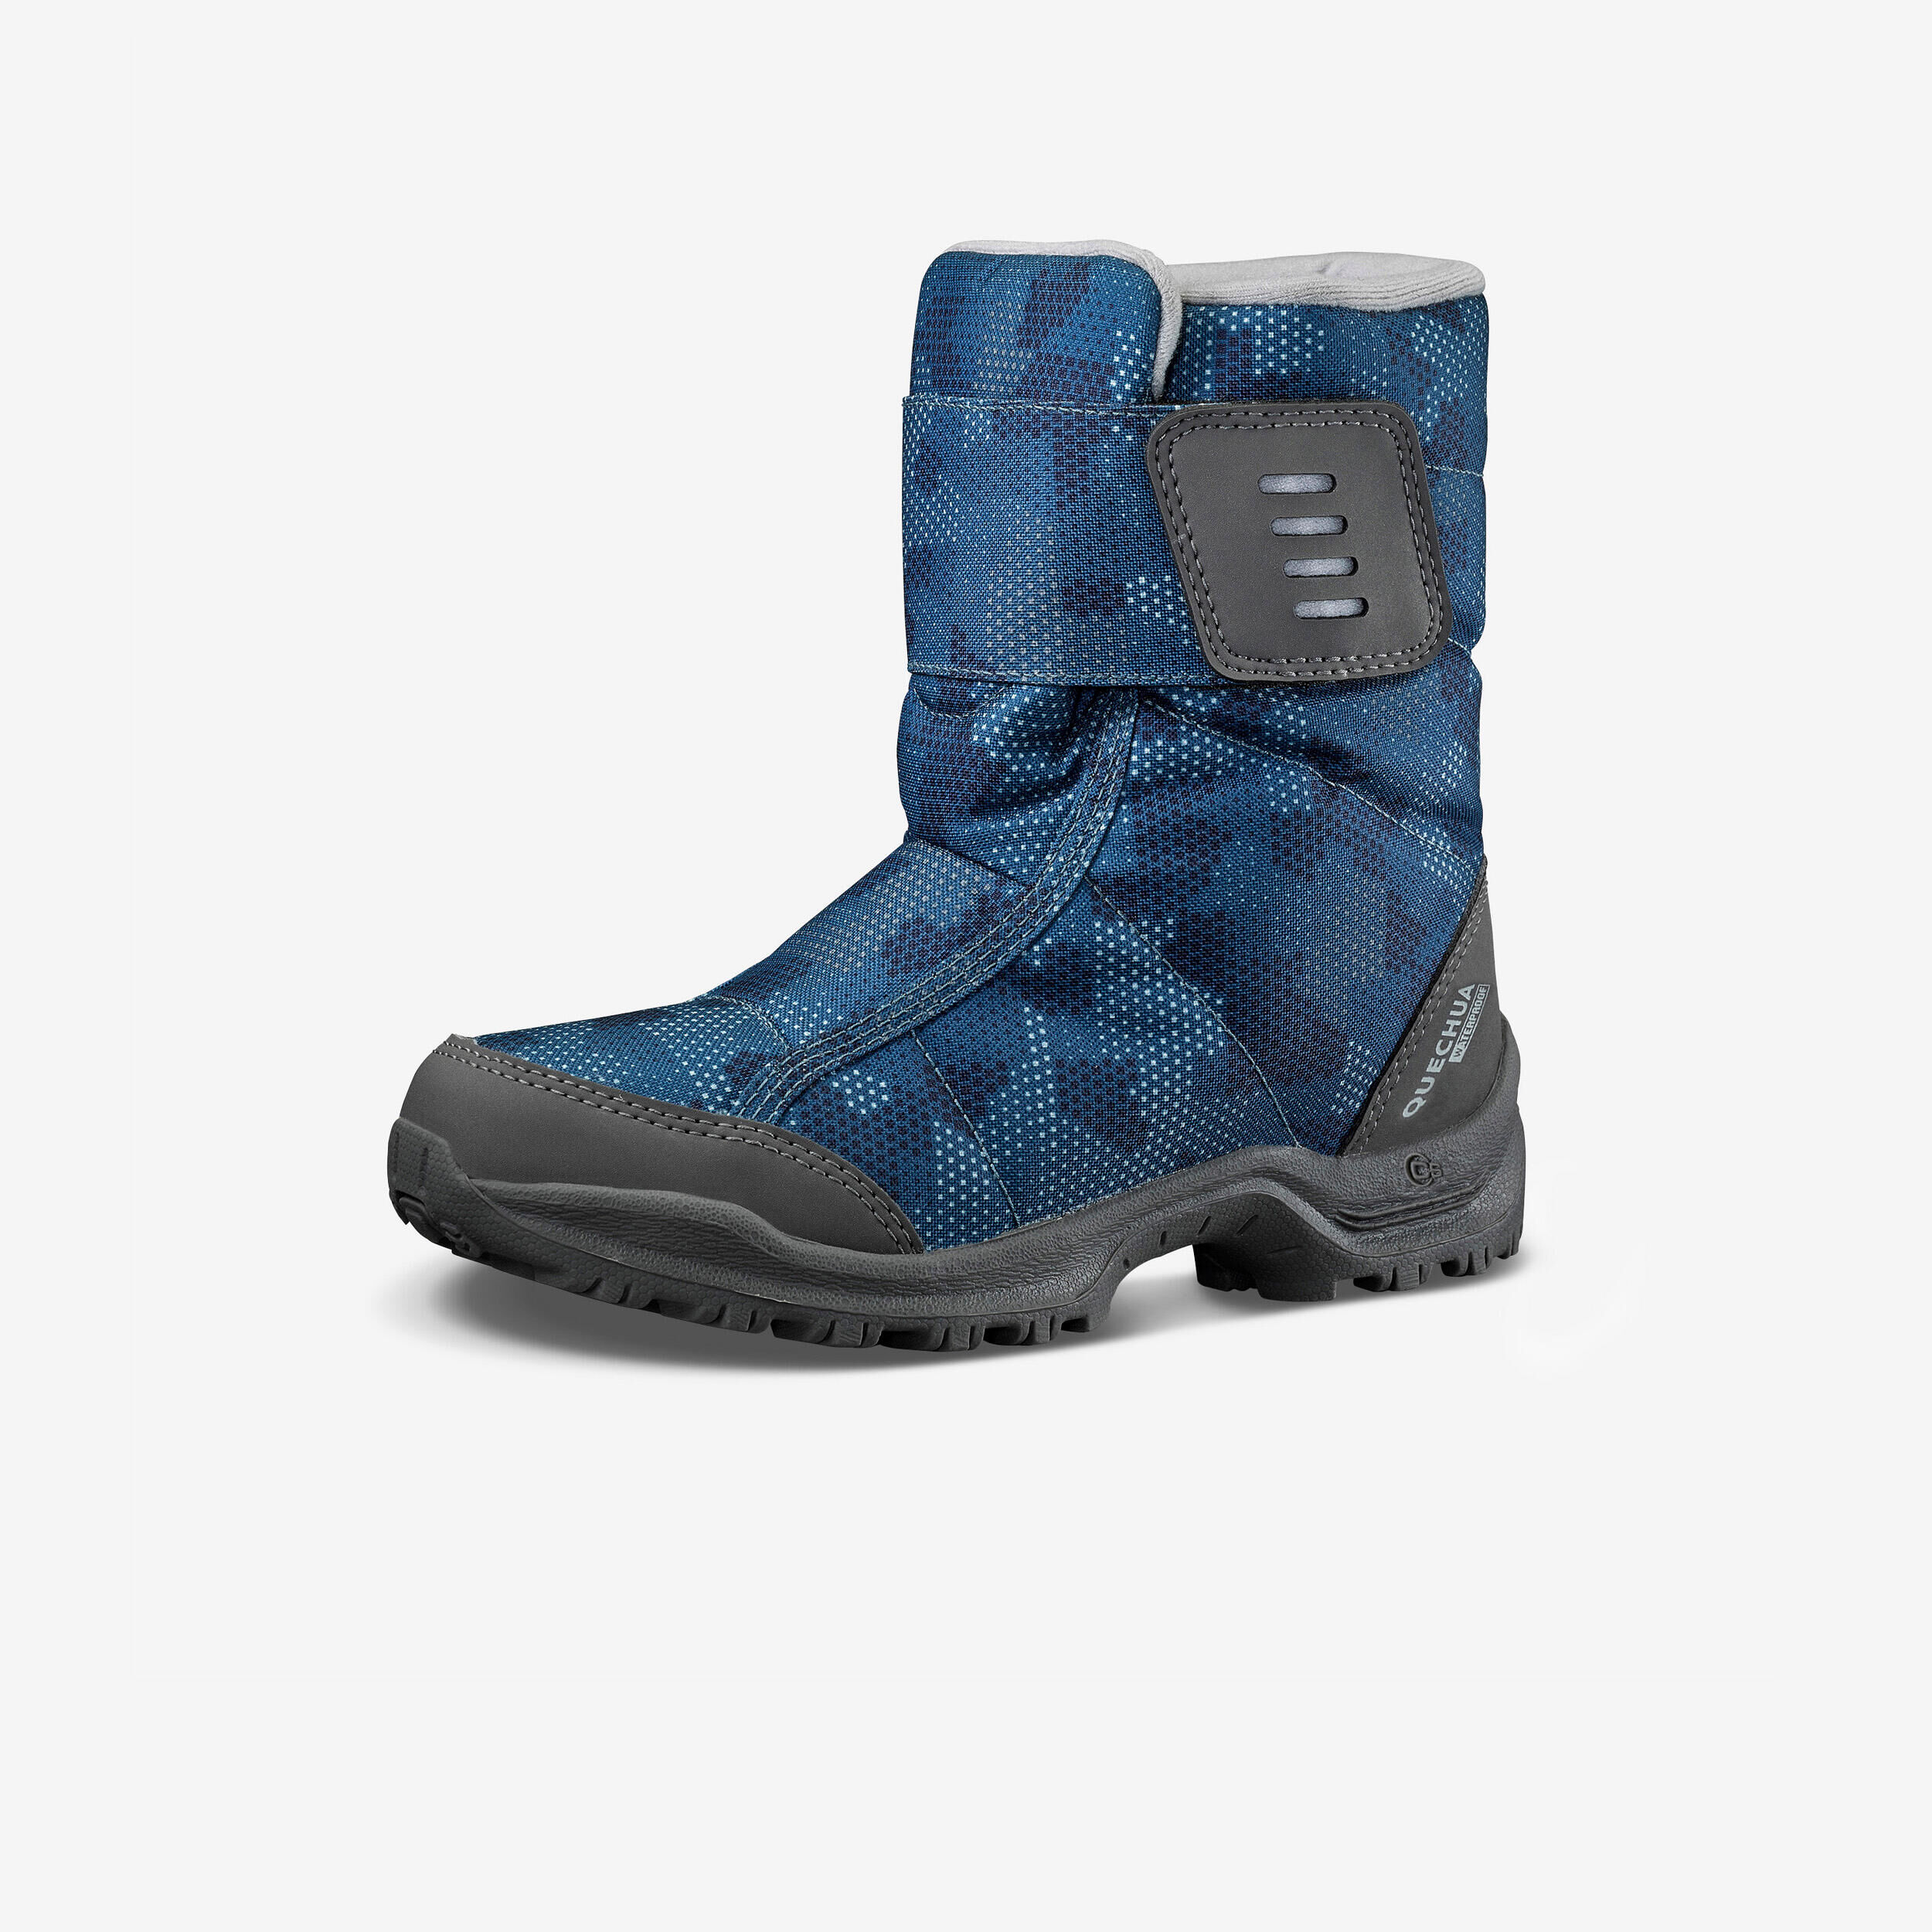 QUECHUA Kids’ Warm Waterproof Snow Hiking Boots SH100 X-Warm Size 7 - 5.5